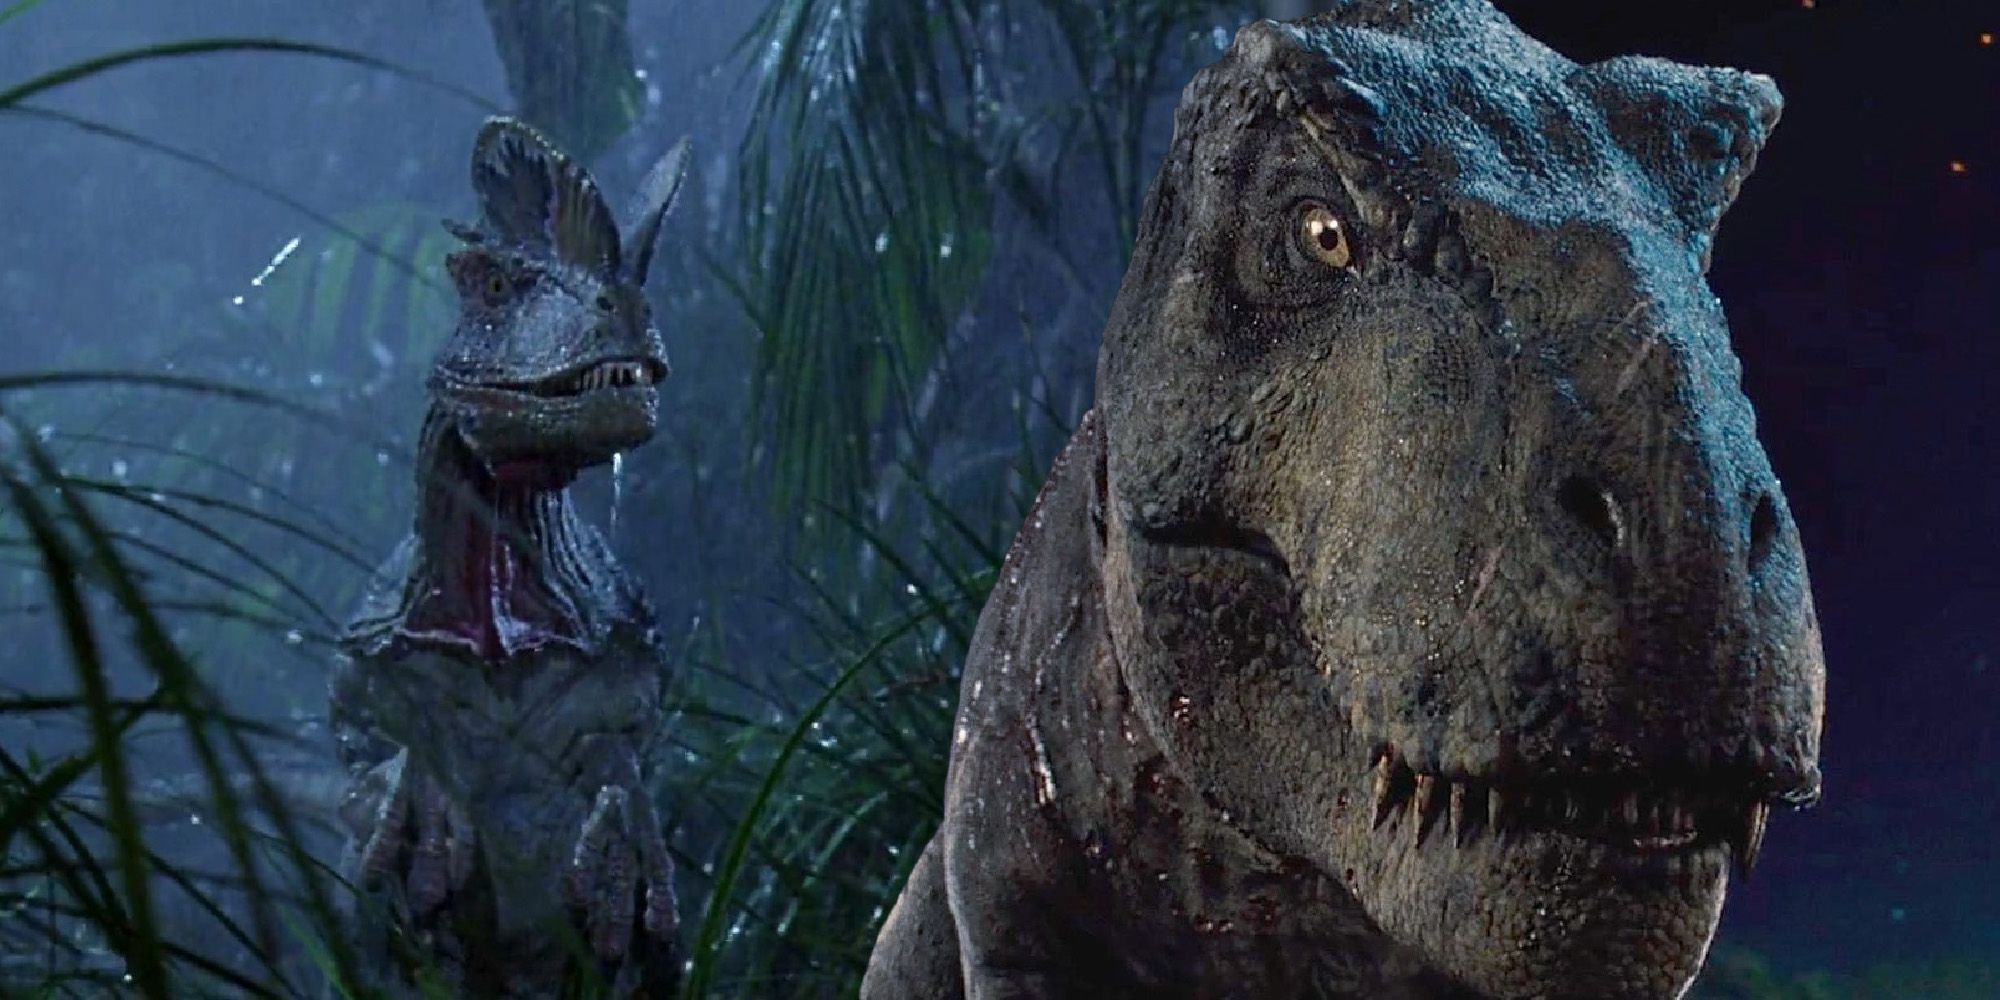 Dinosaurs in Jurassic Park - Wikipedia